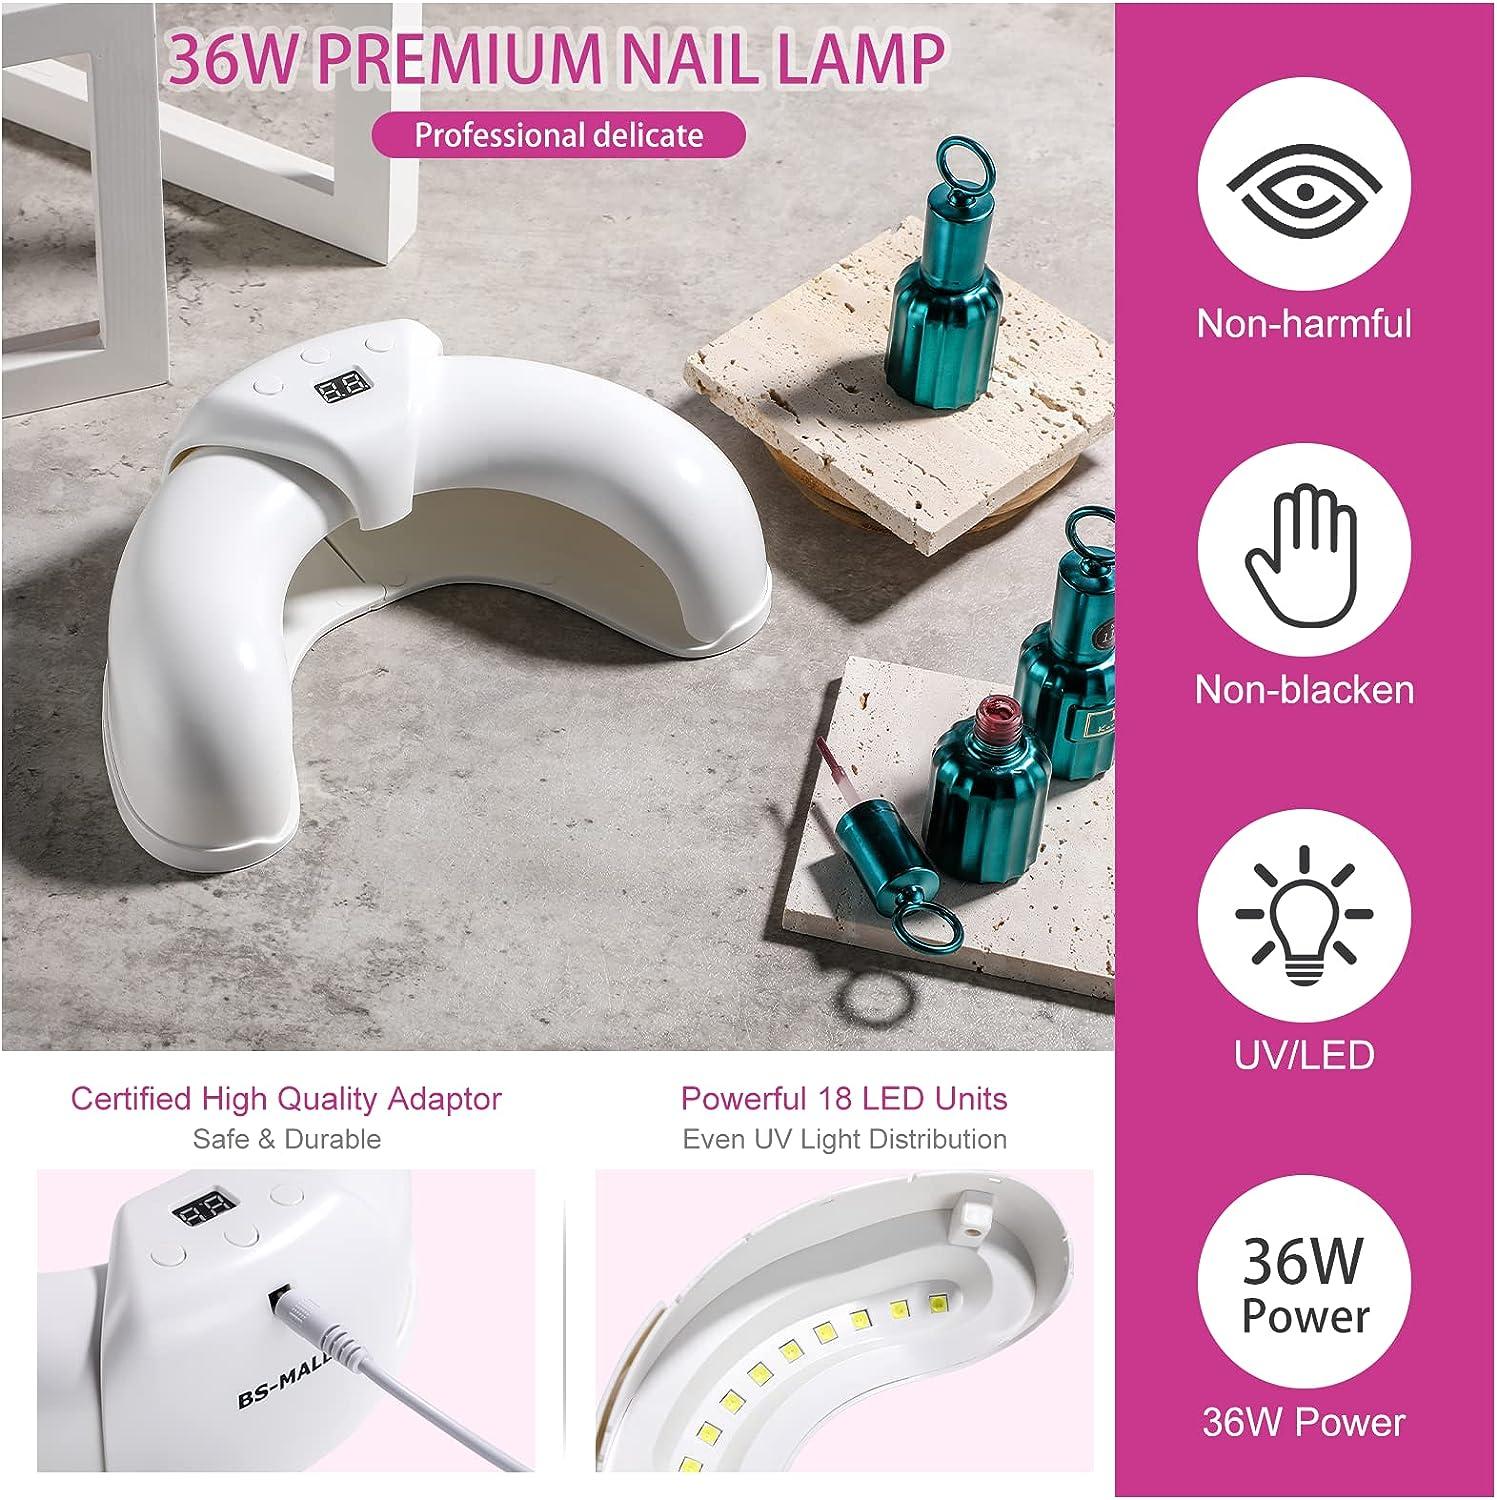 The Best Cheap UV LED Nail Lamp? Review for SUN 5 48w Hybrid Gel Lamp 